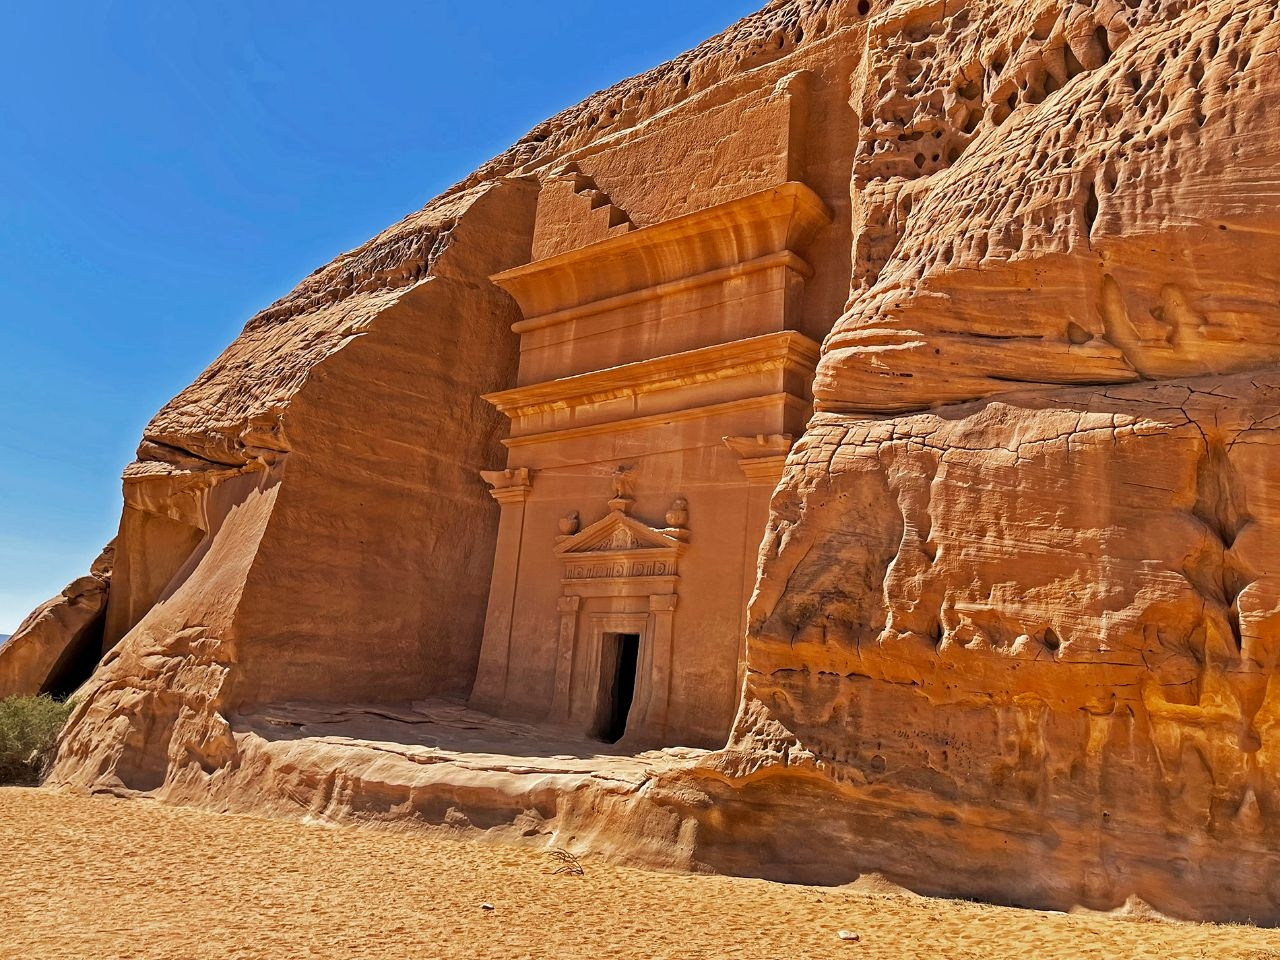 Jabal Al Banat, Hegra Archaeological Site (UNESCO # 1293)